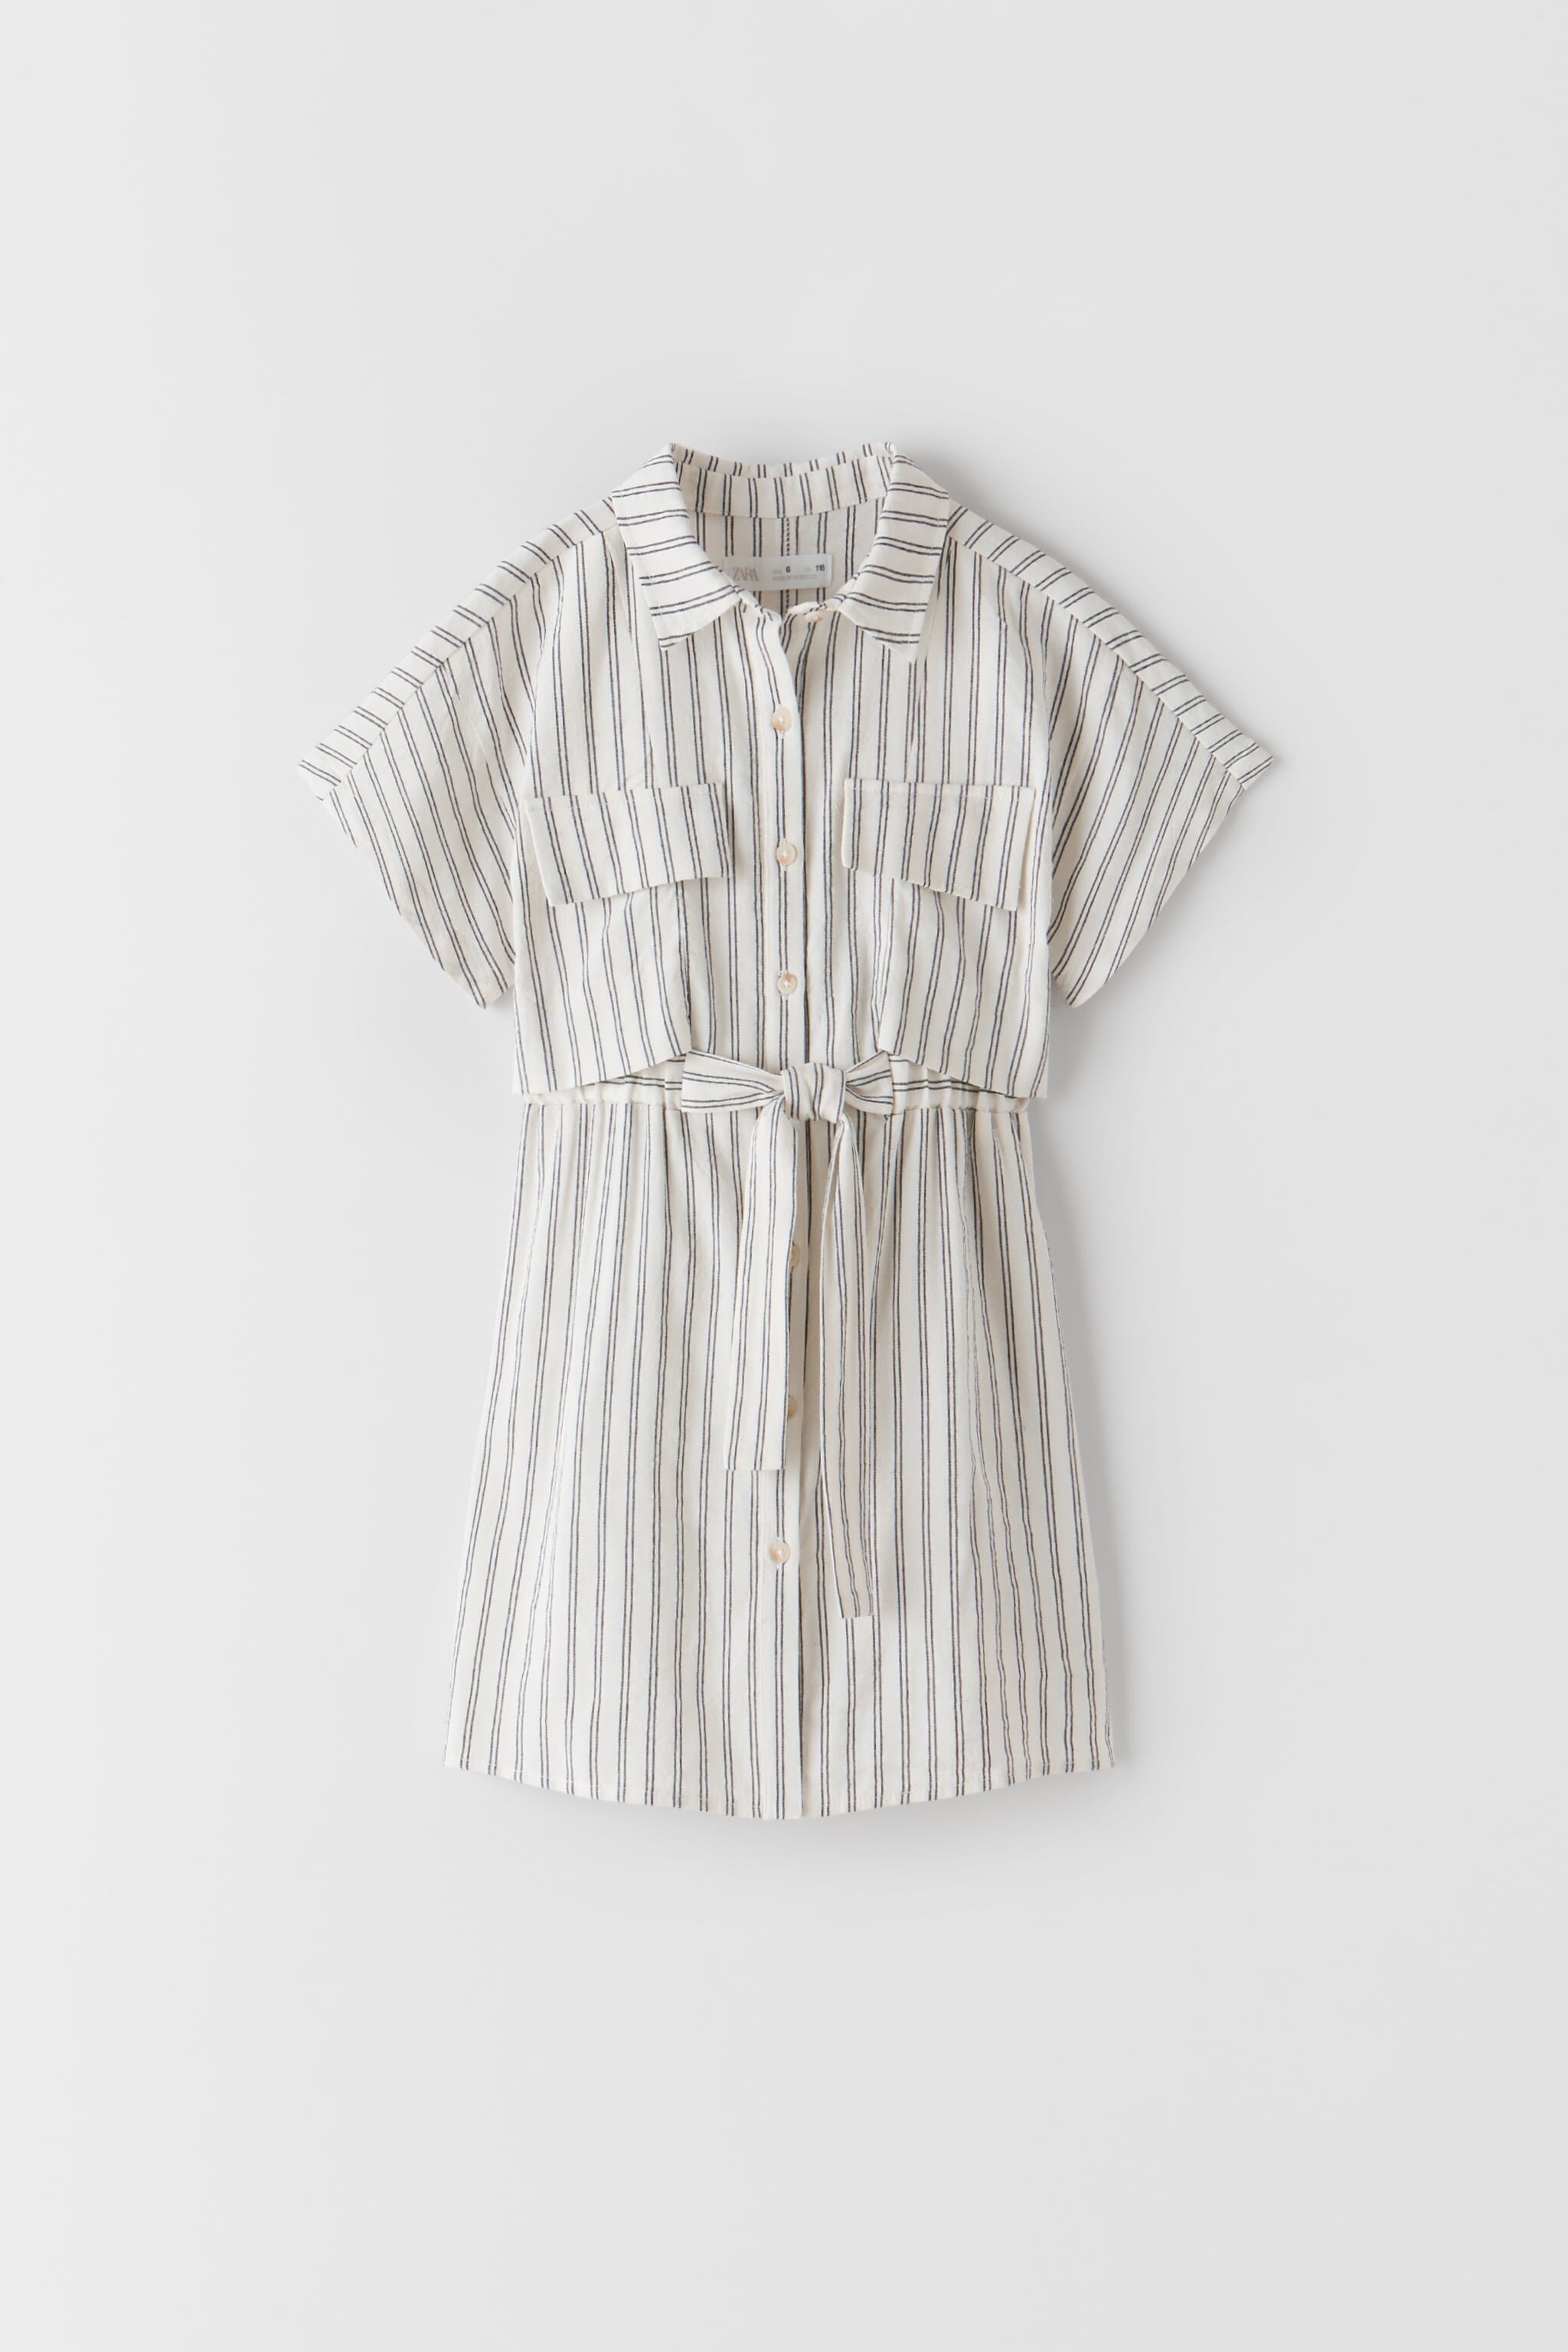 Striped Shirt Dress, ₱1,190